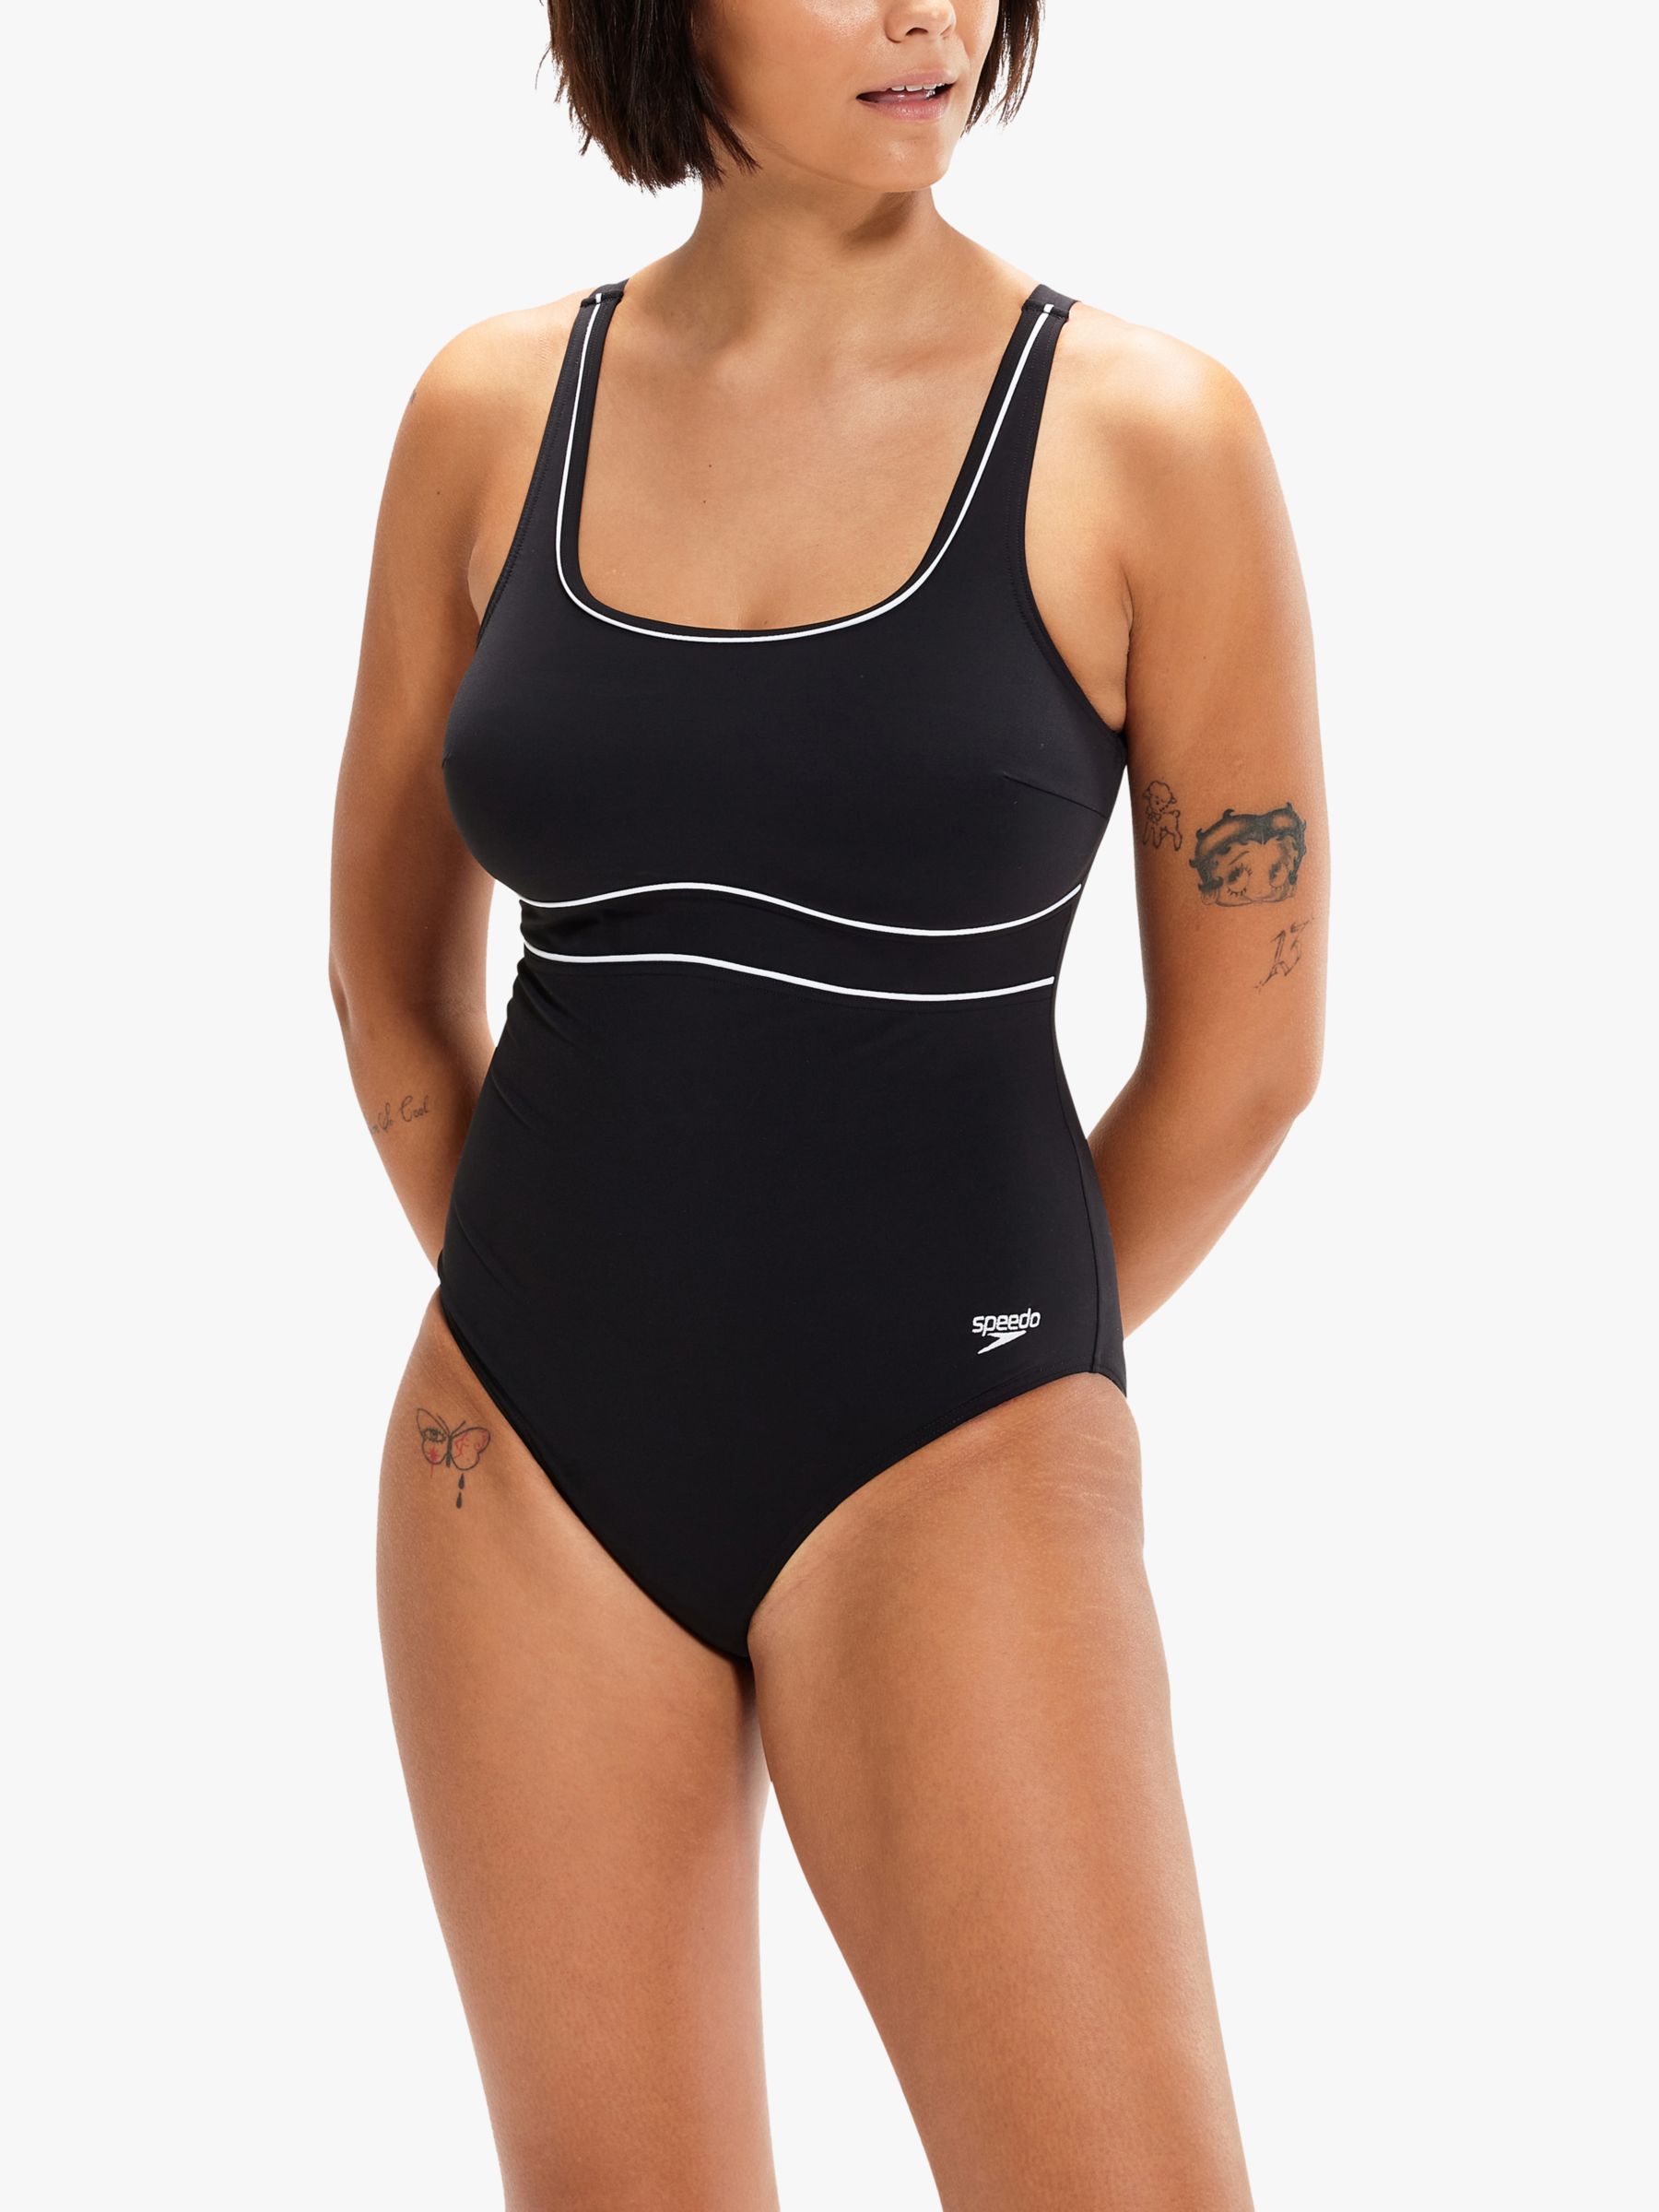 Speedo Shaping ContourEclipse Swimsuit, Black/White, 40